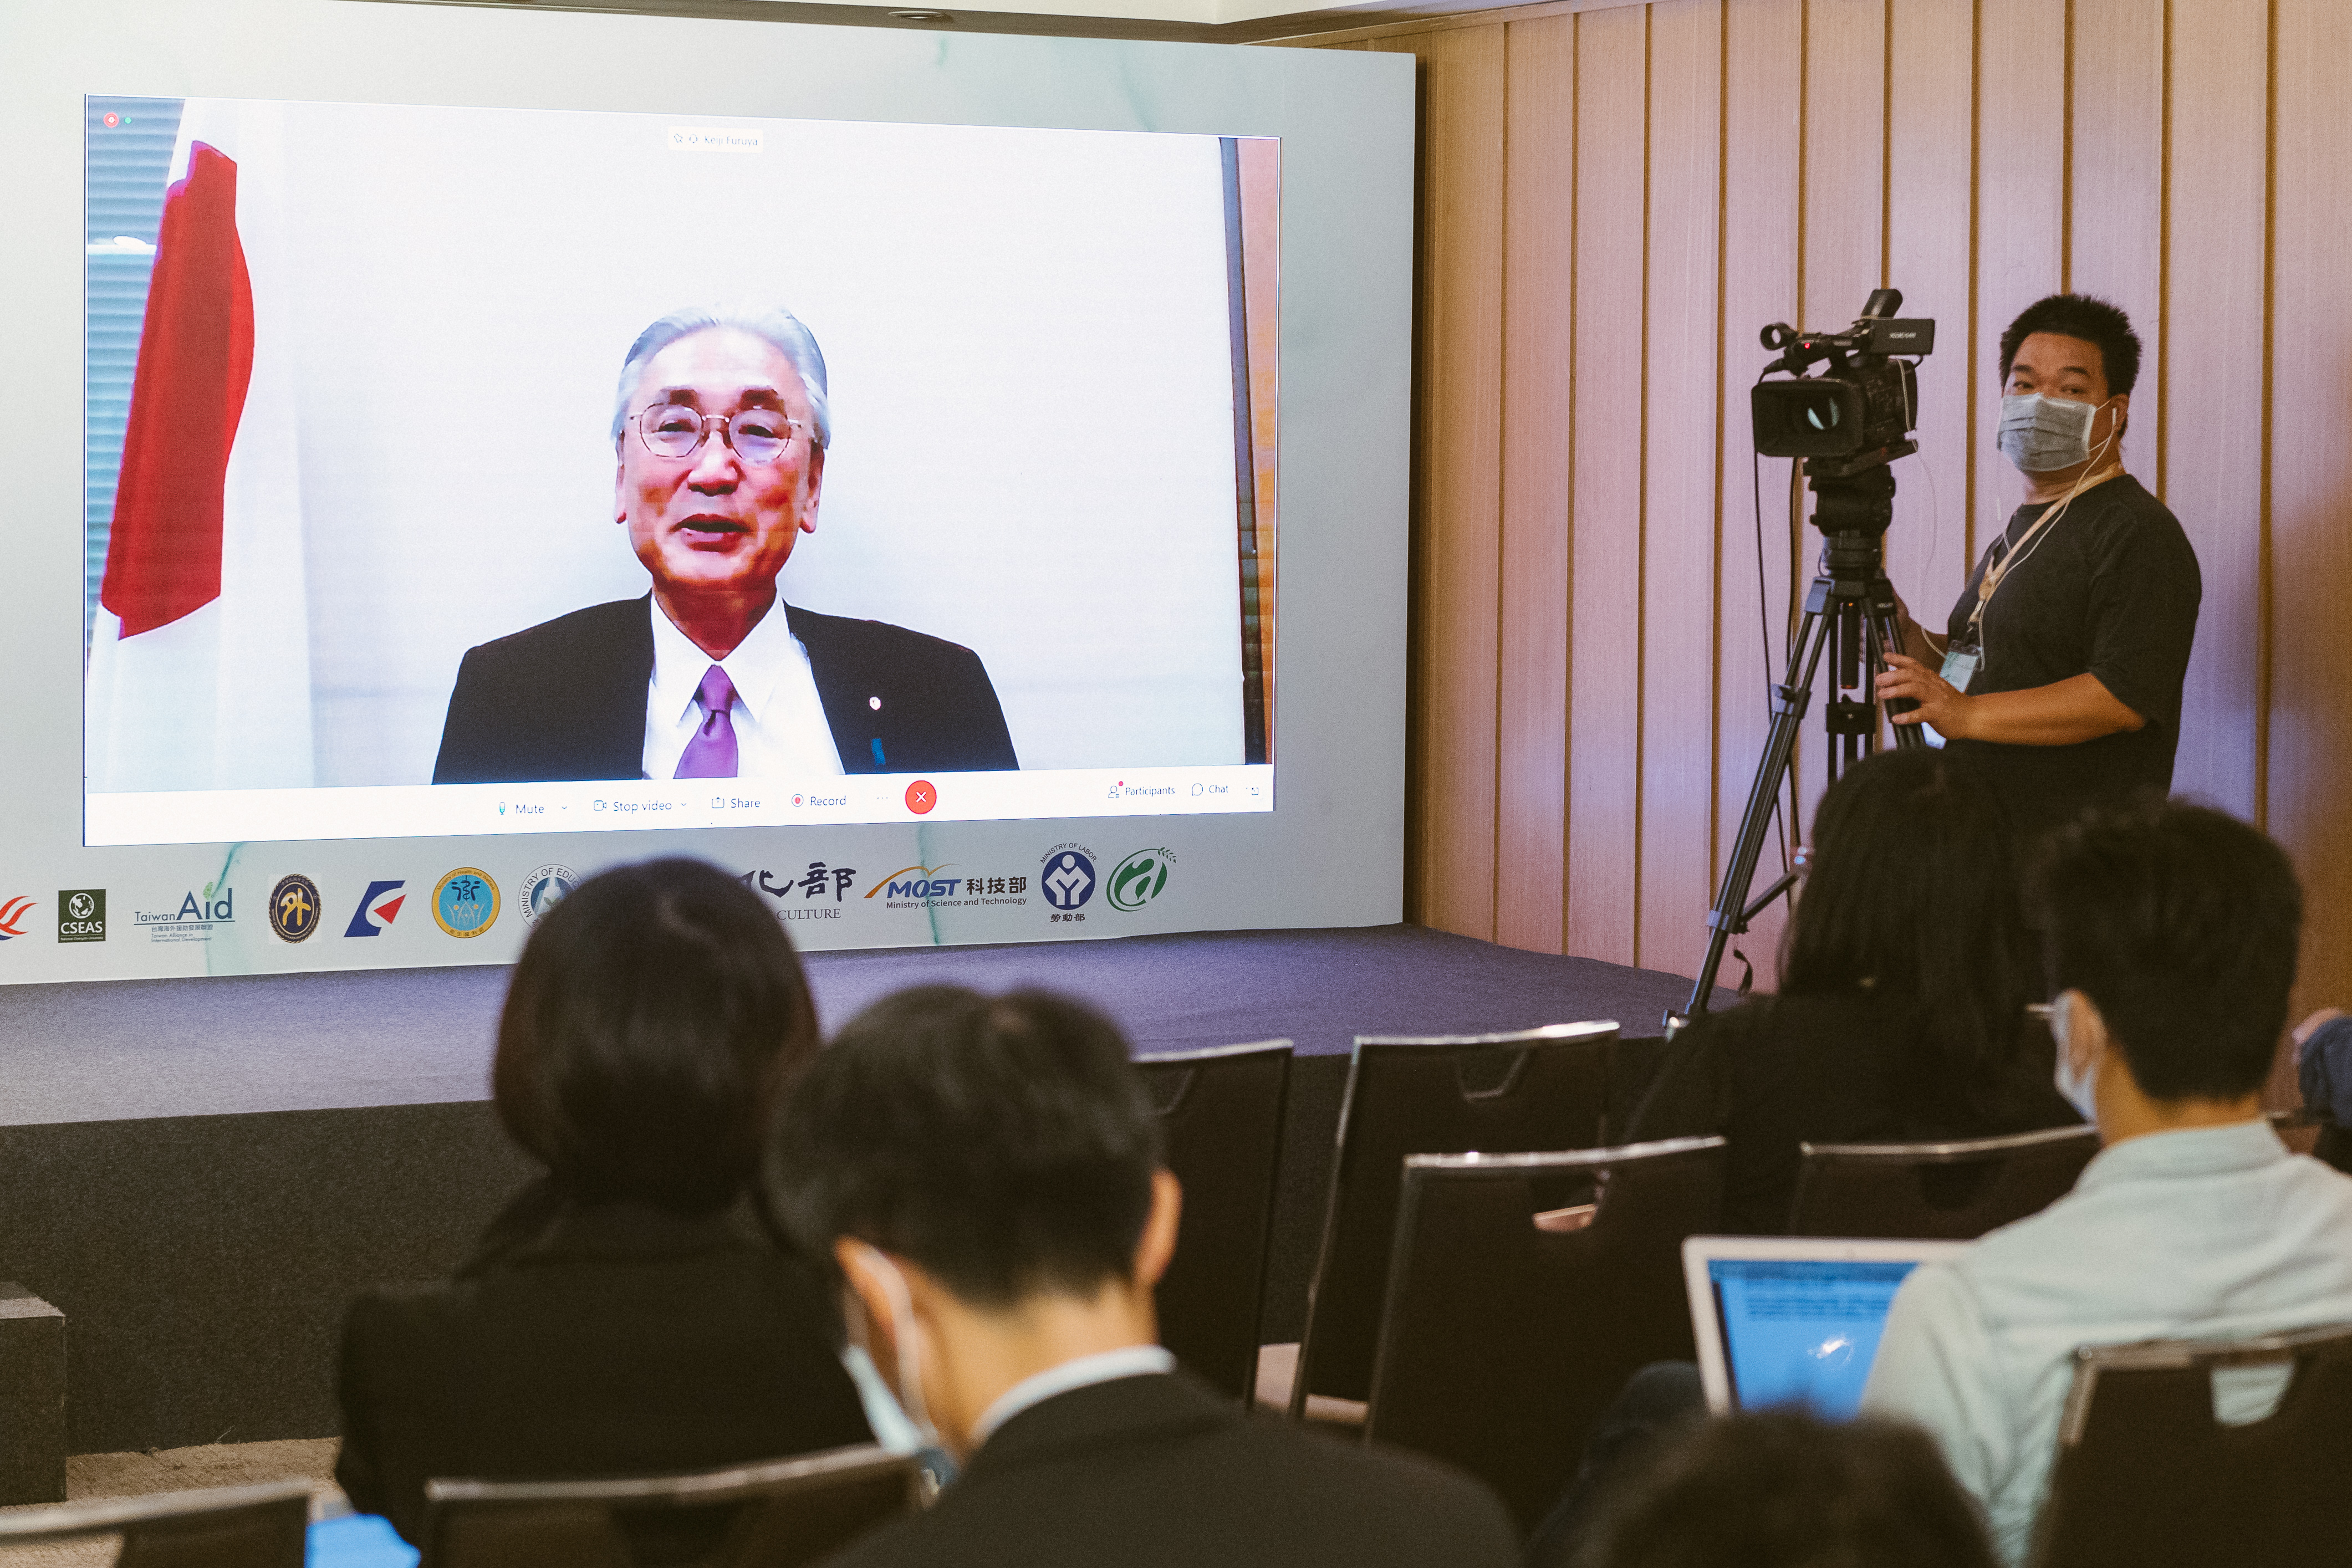 Press Conference: The Hon. Keiji Furuya, Member of the House of Representatives, Japan